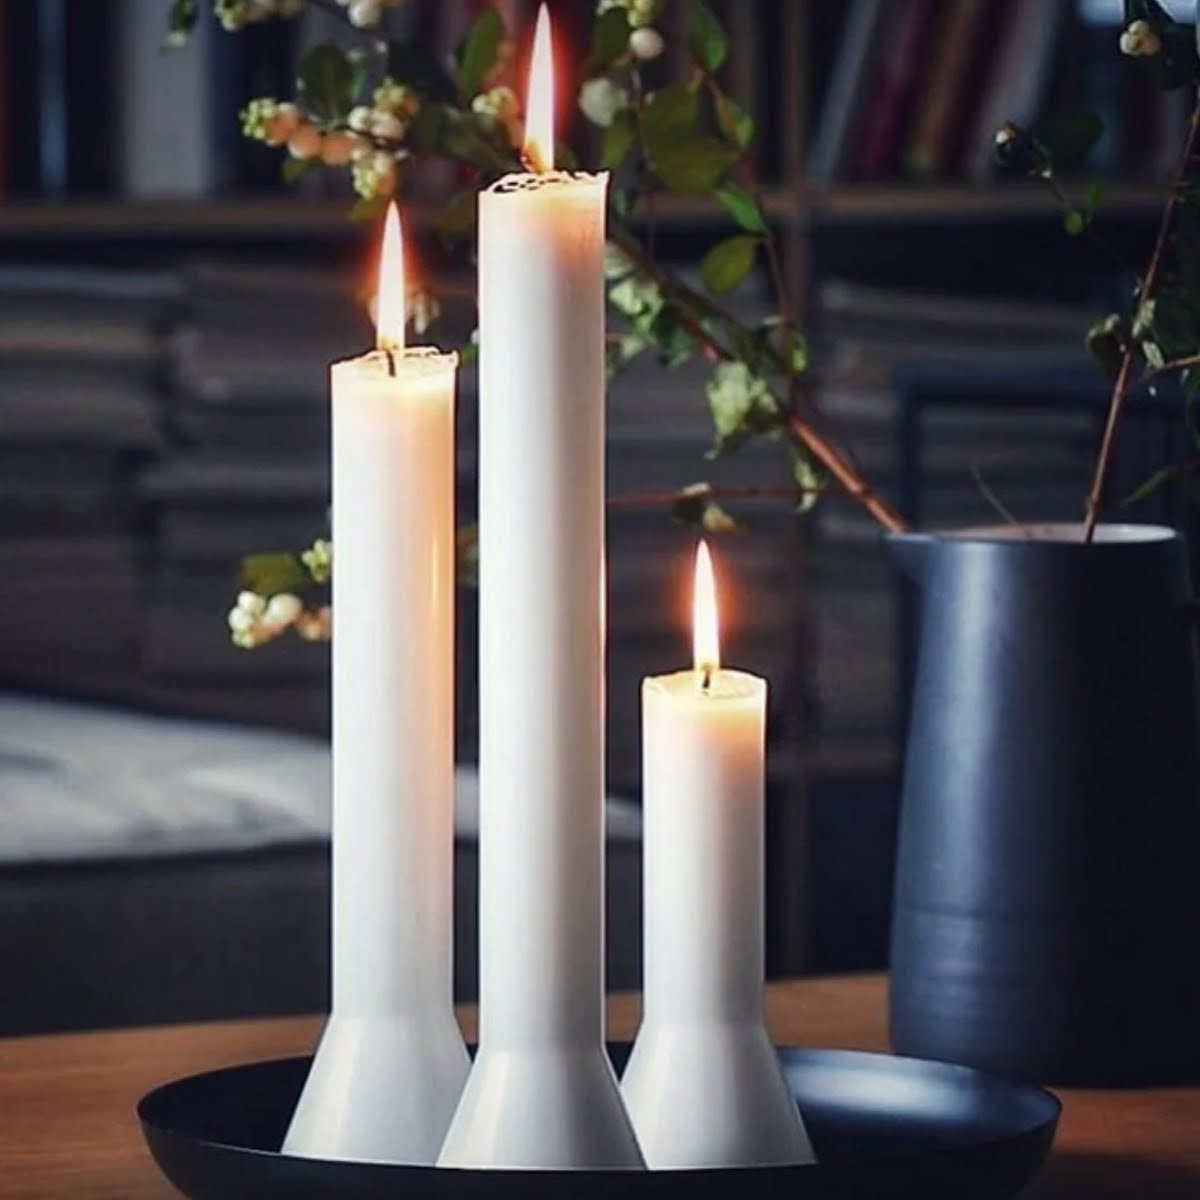 Nordic Elements Hyggelyset Candle, €25